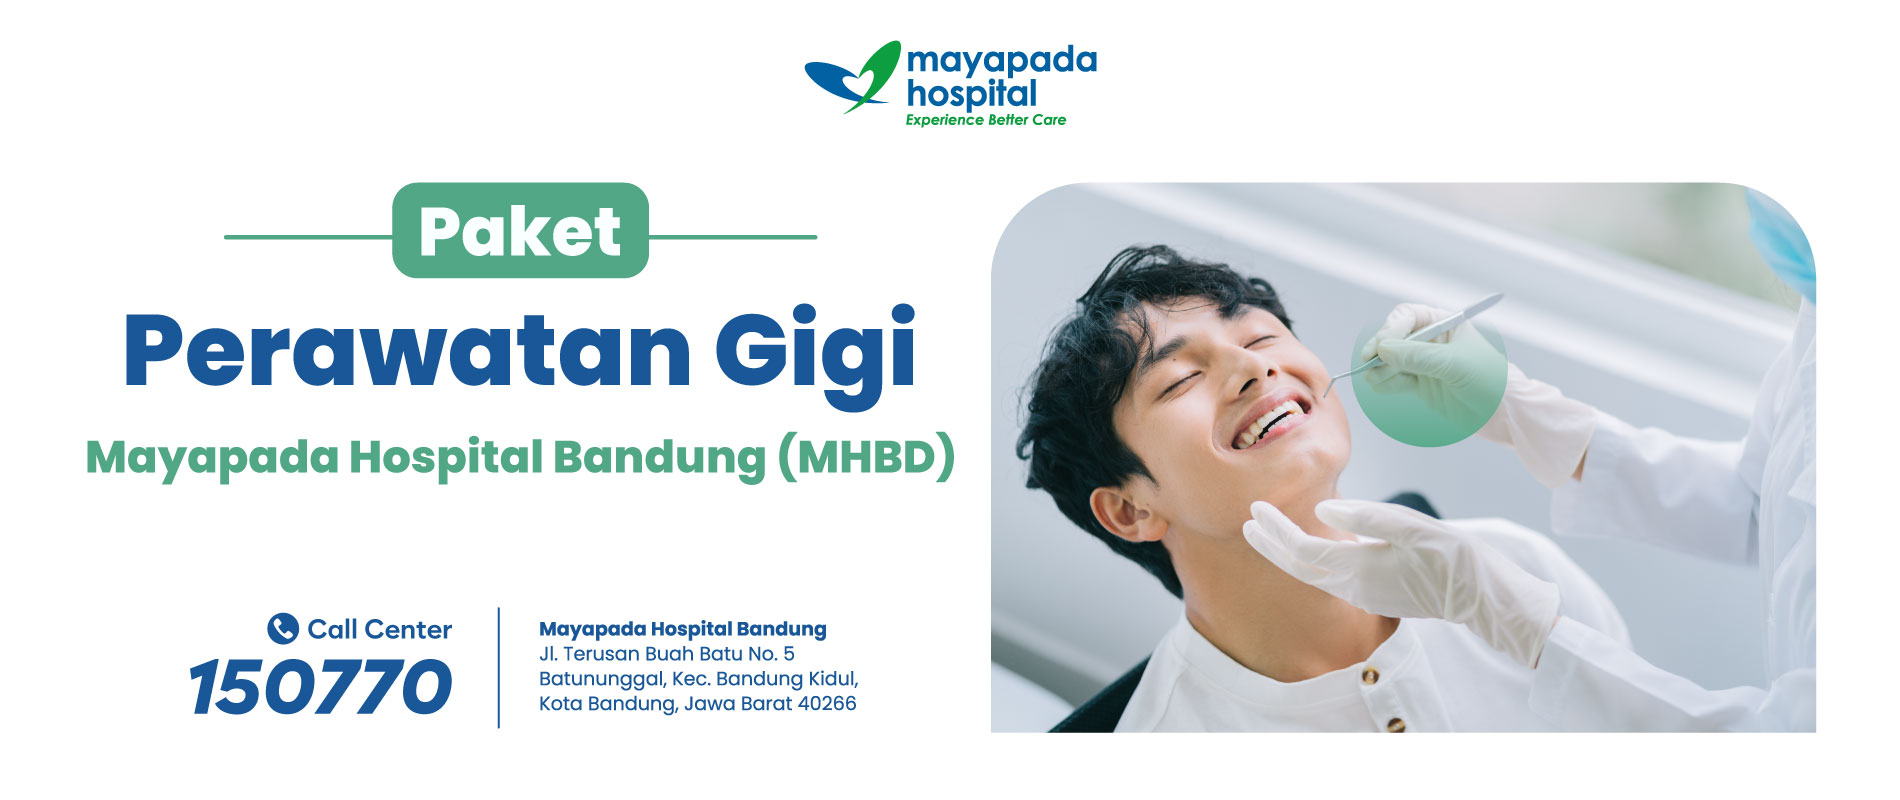 Promo Perawatan Gigi Mayapada Hospital Bandung (MHBD) IMG